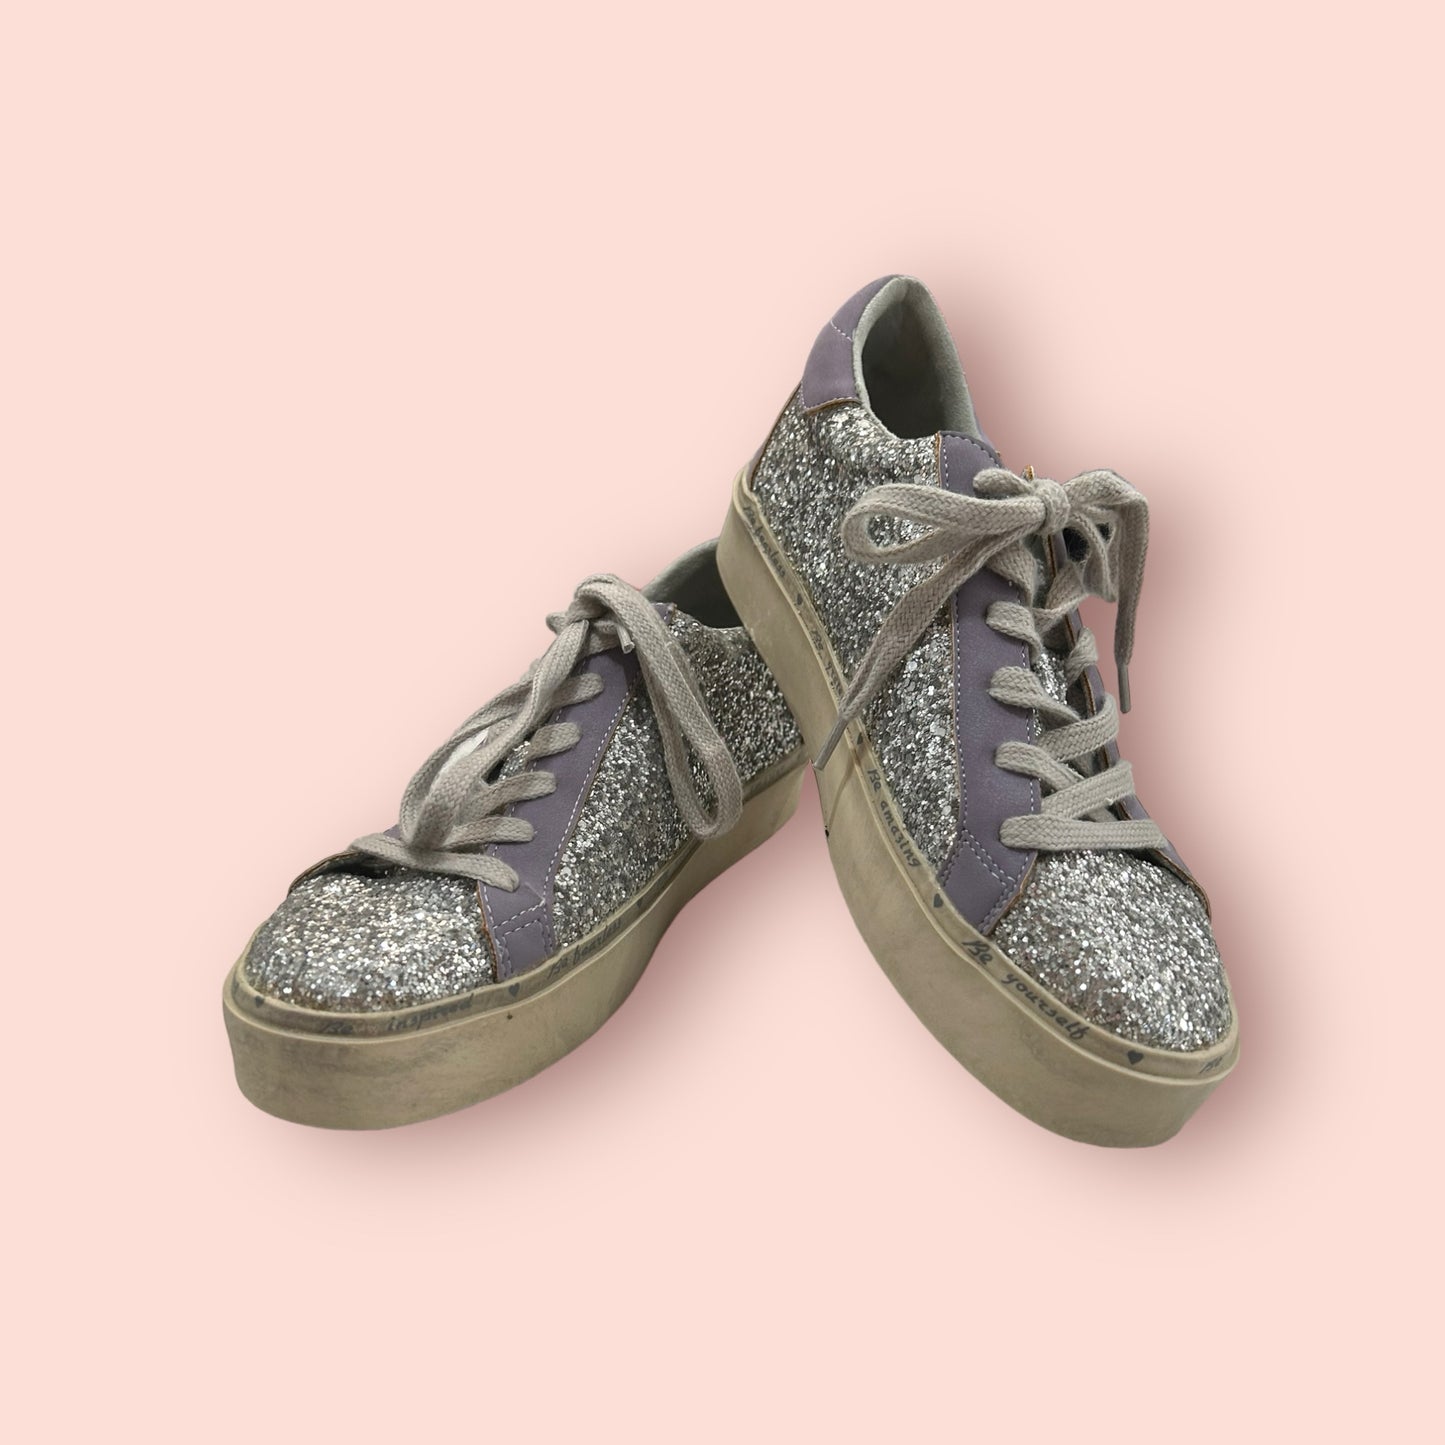 Shu Shop Size 8 Good Lavender Sneakers